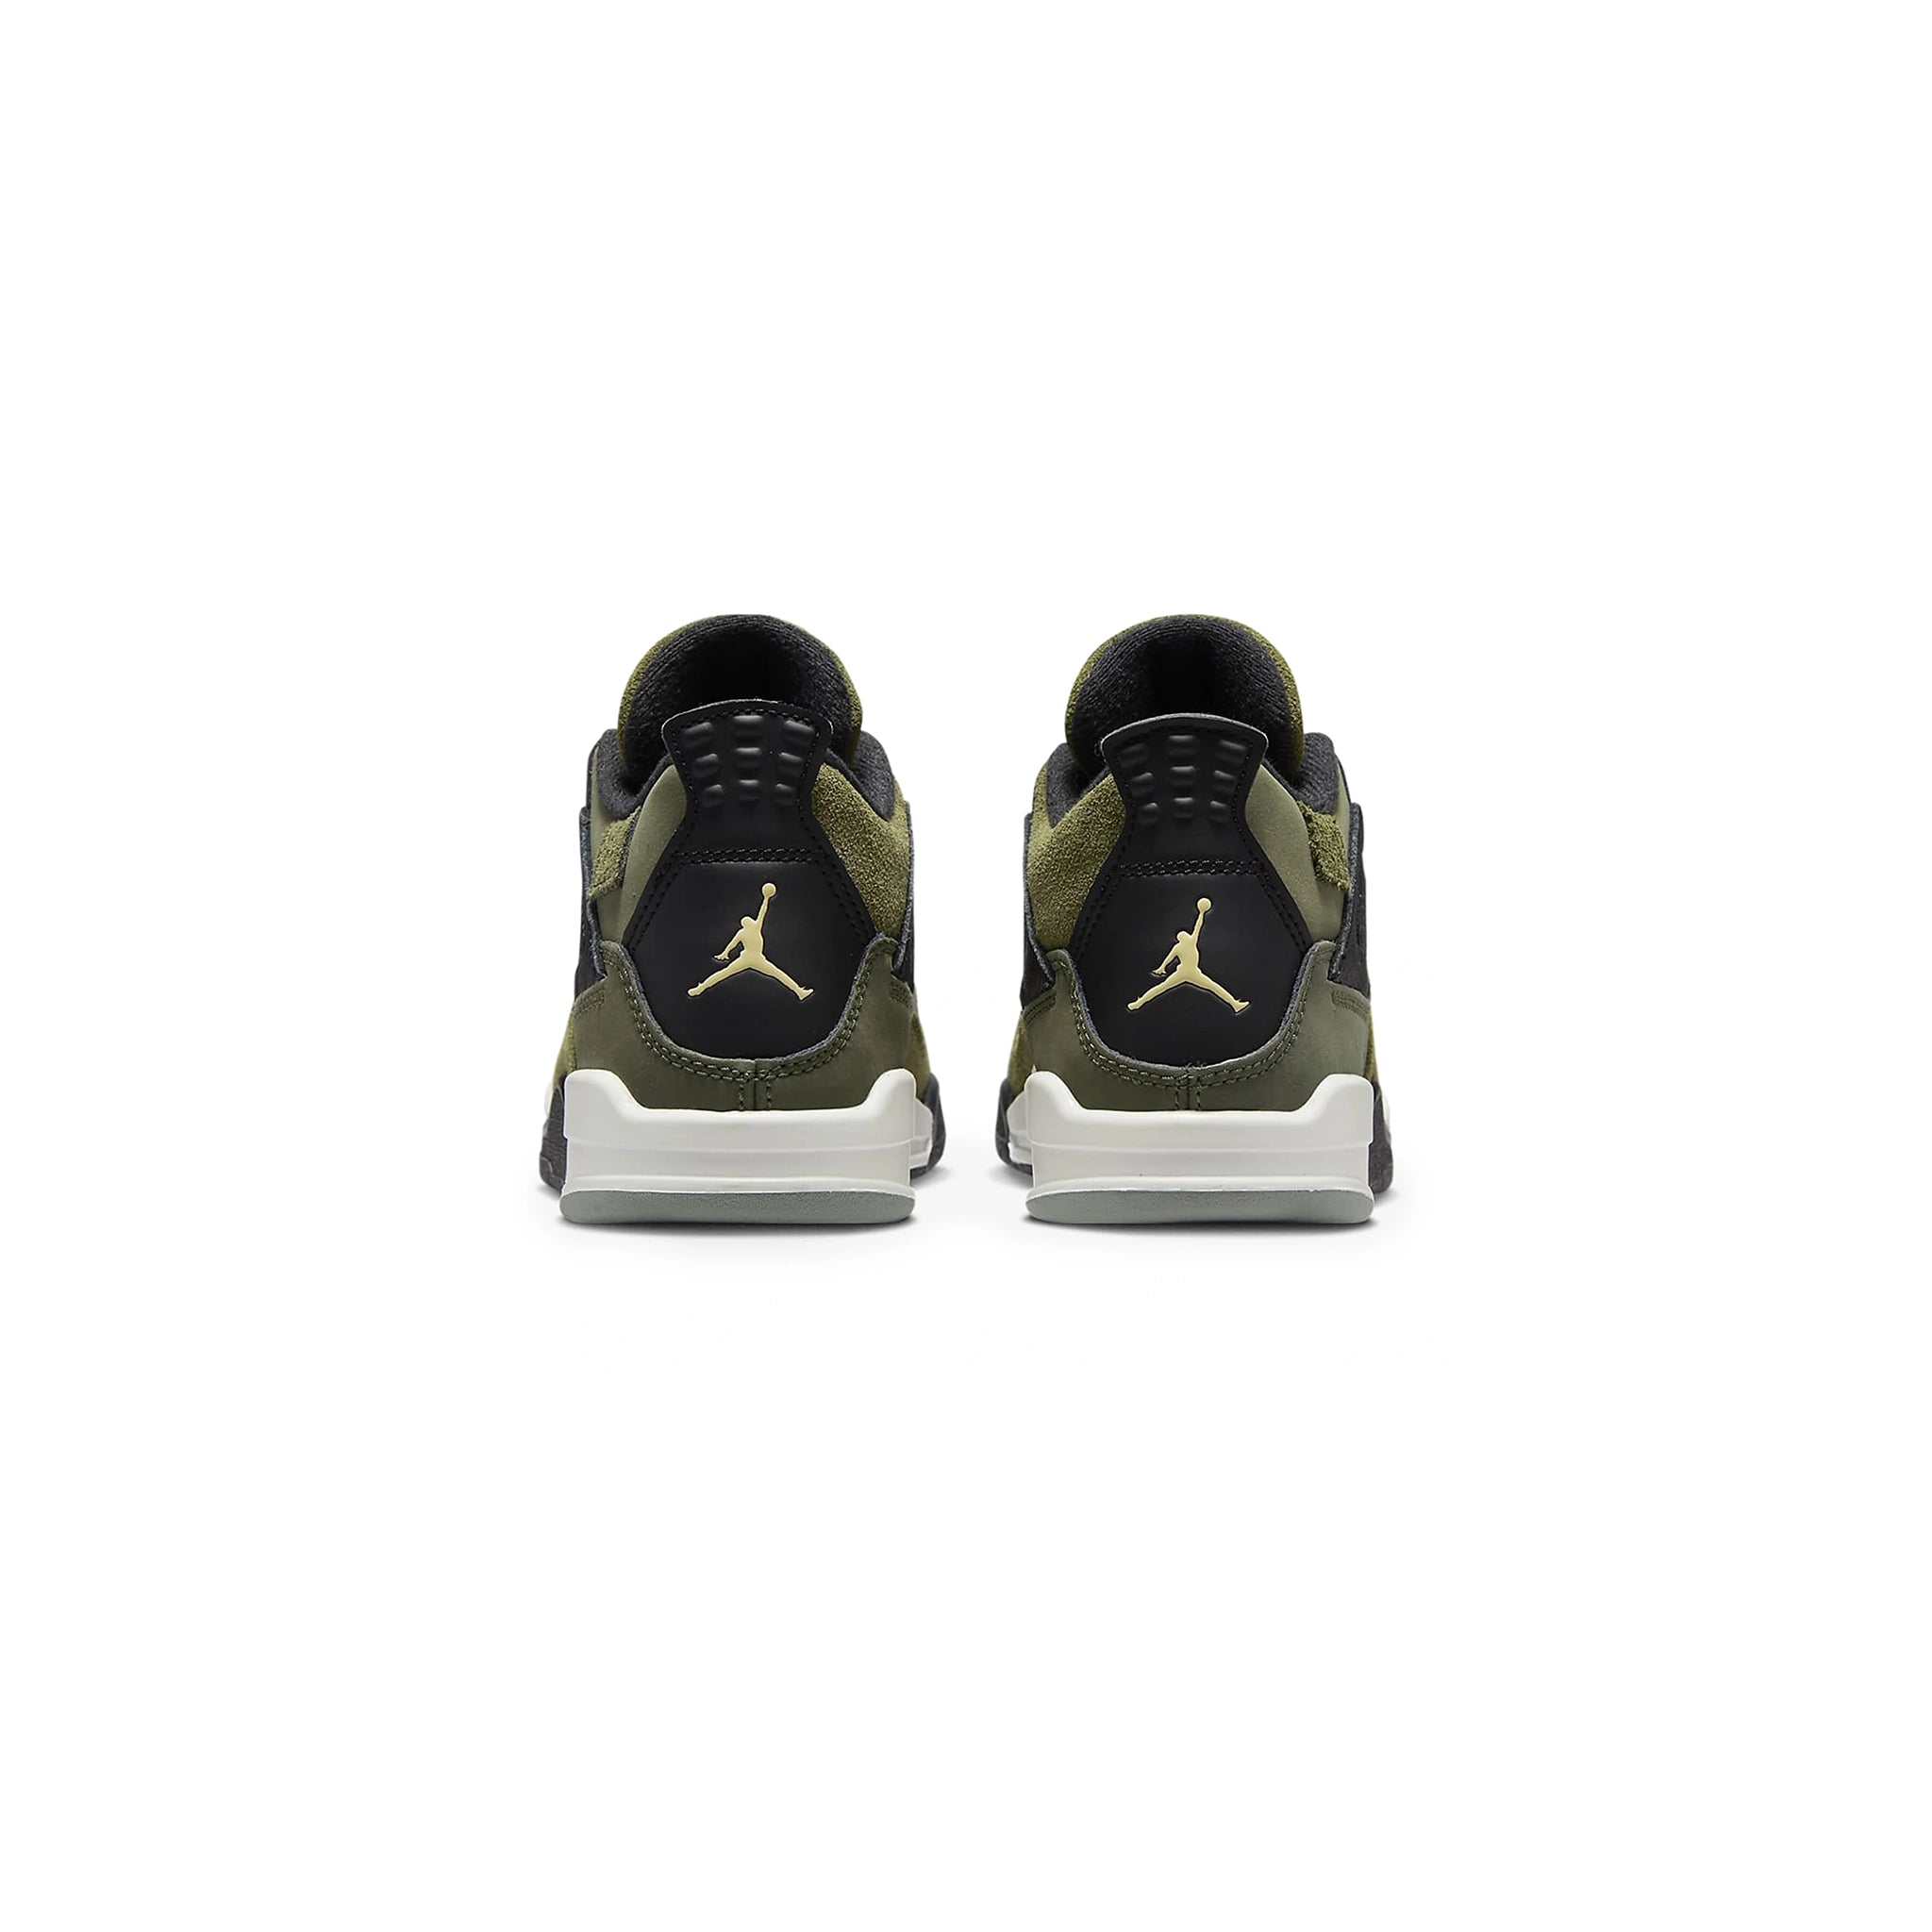 Back view of Air Jordan 4 Retro SE Craft Olive (PS) FB9929-200